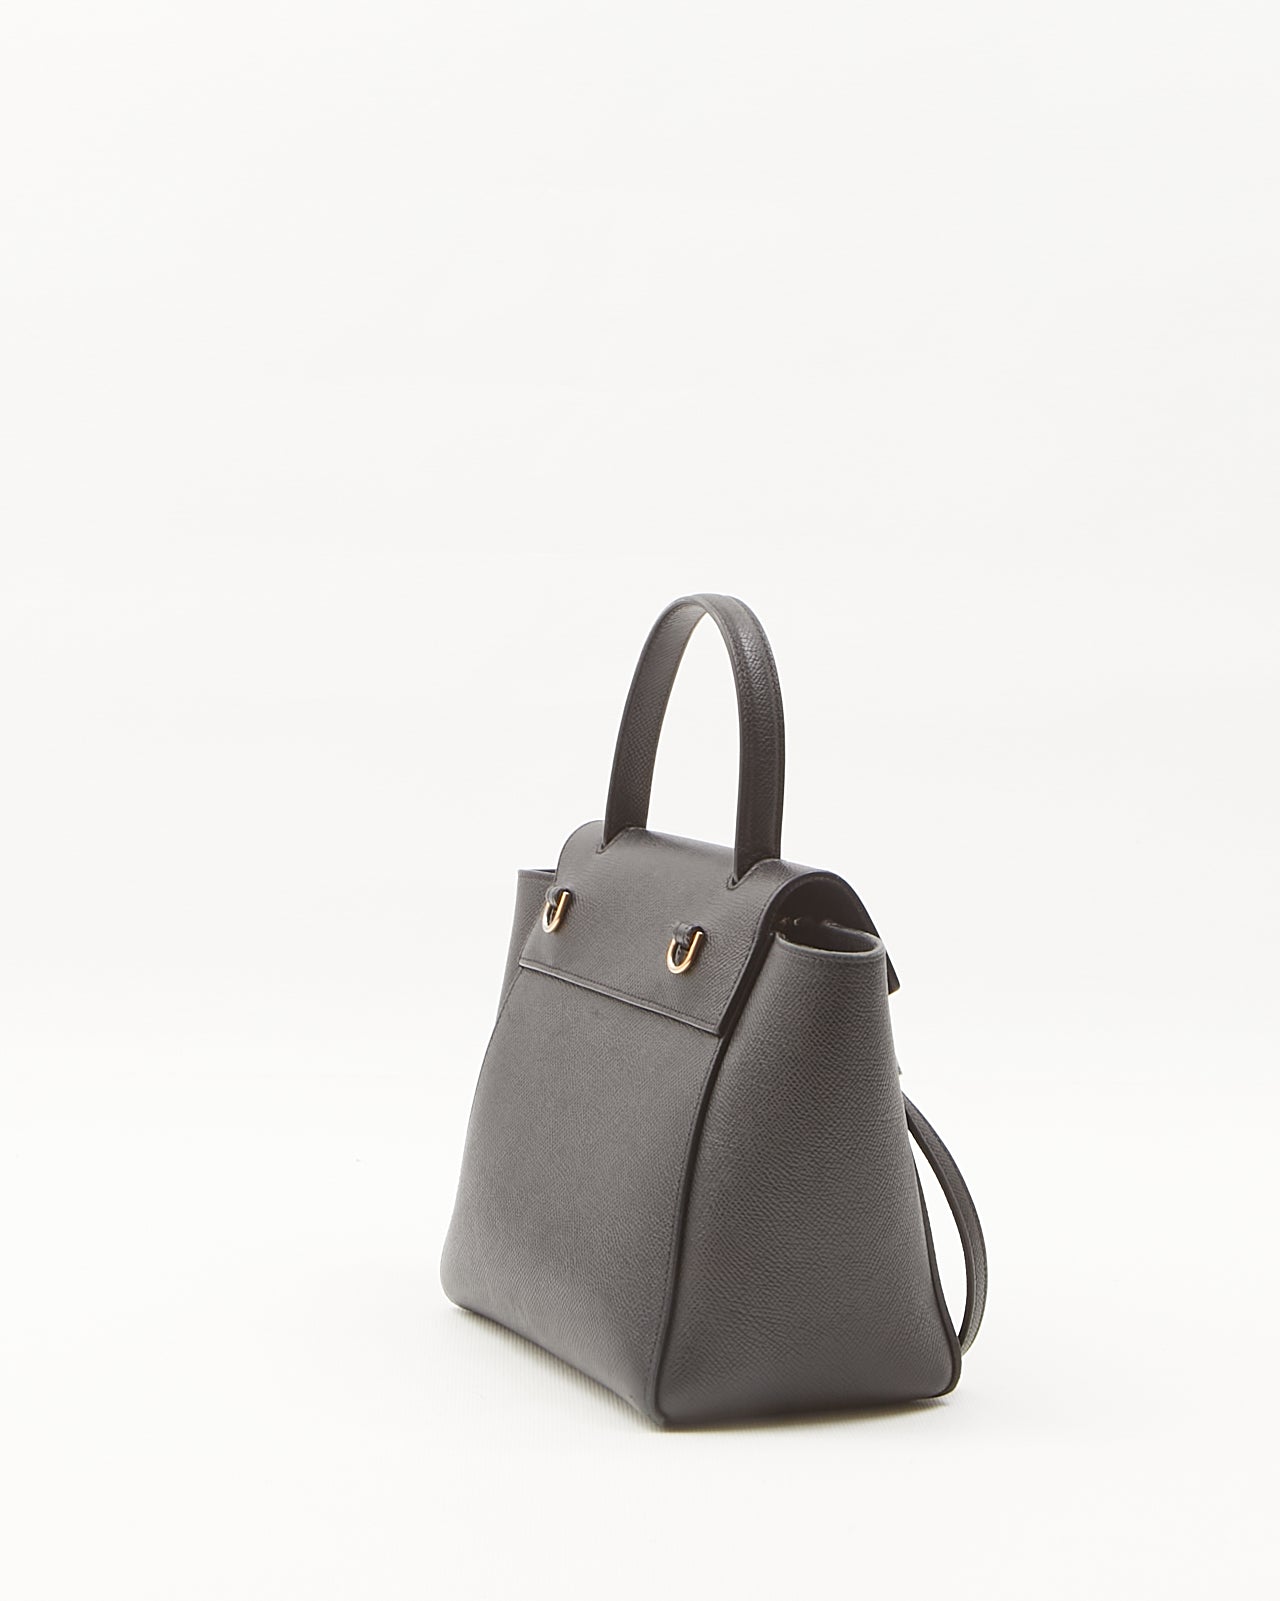 Celine Black Leather Micro Belt Top Handle Bag